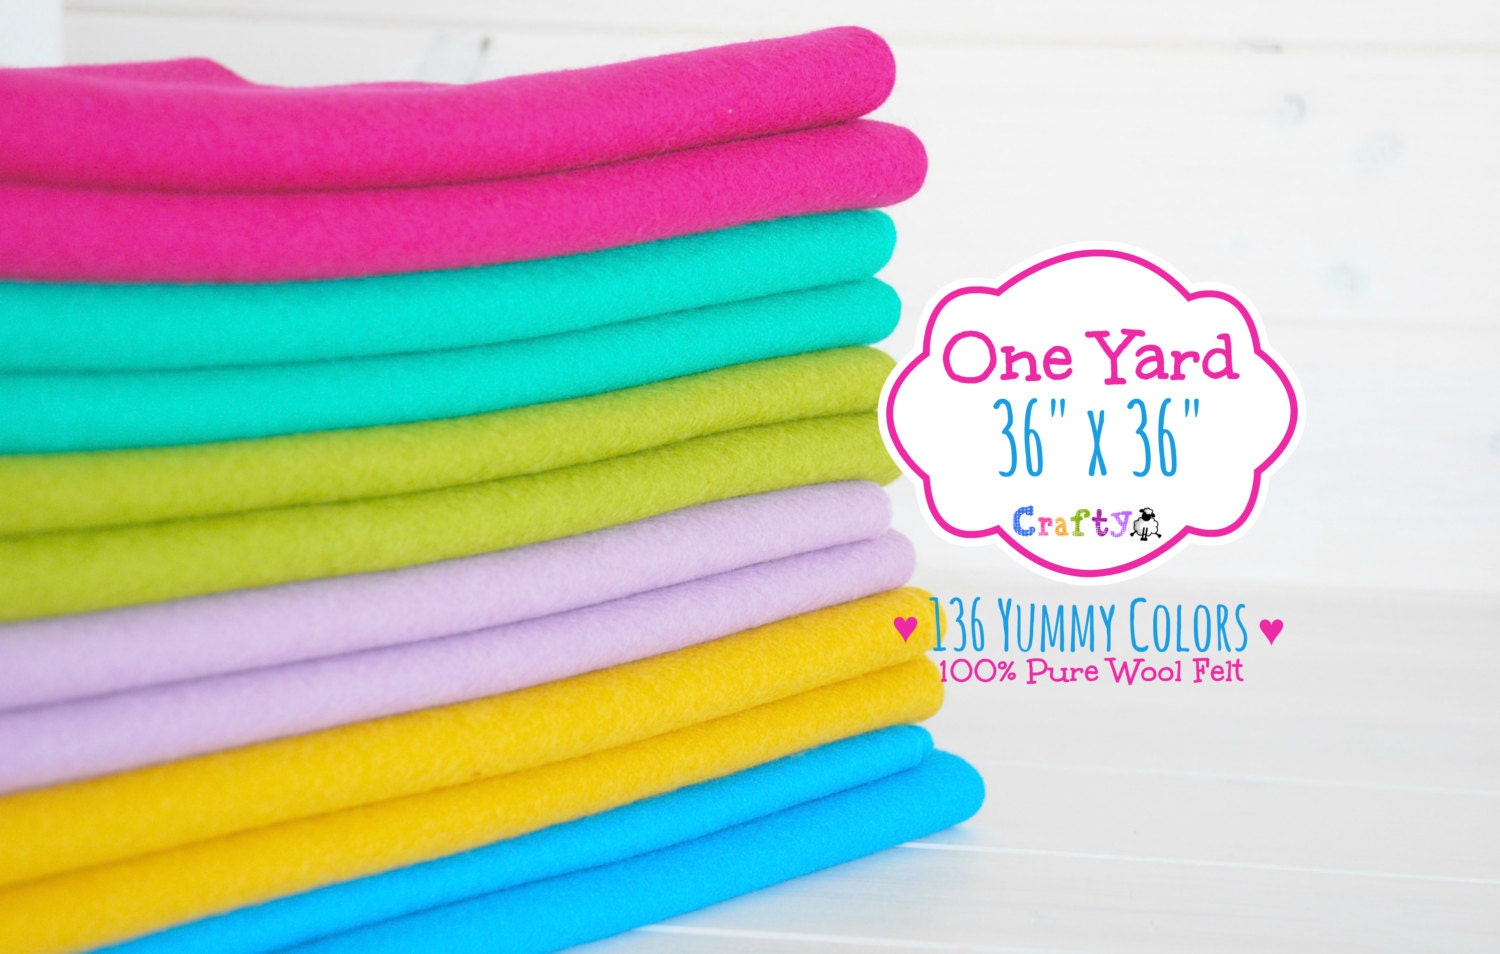 Choose your Color - 1 Yard - 100% Merino Wool Felt by the Yard